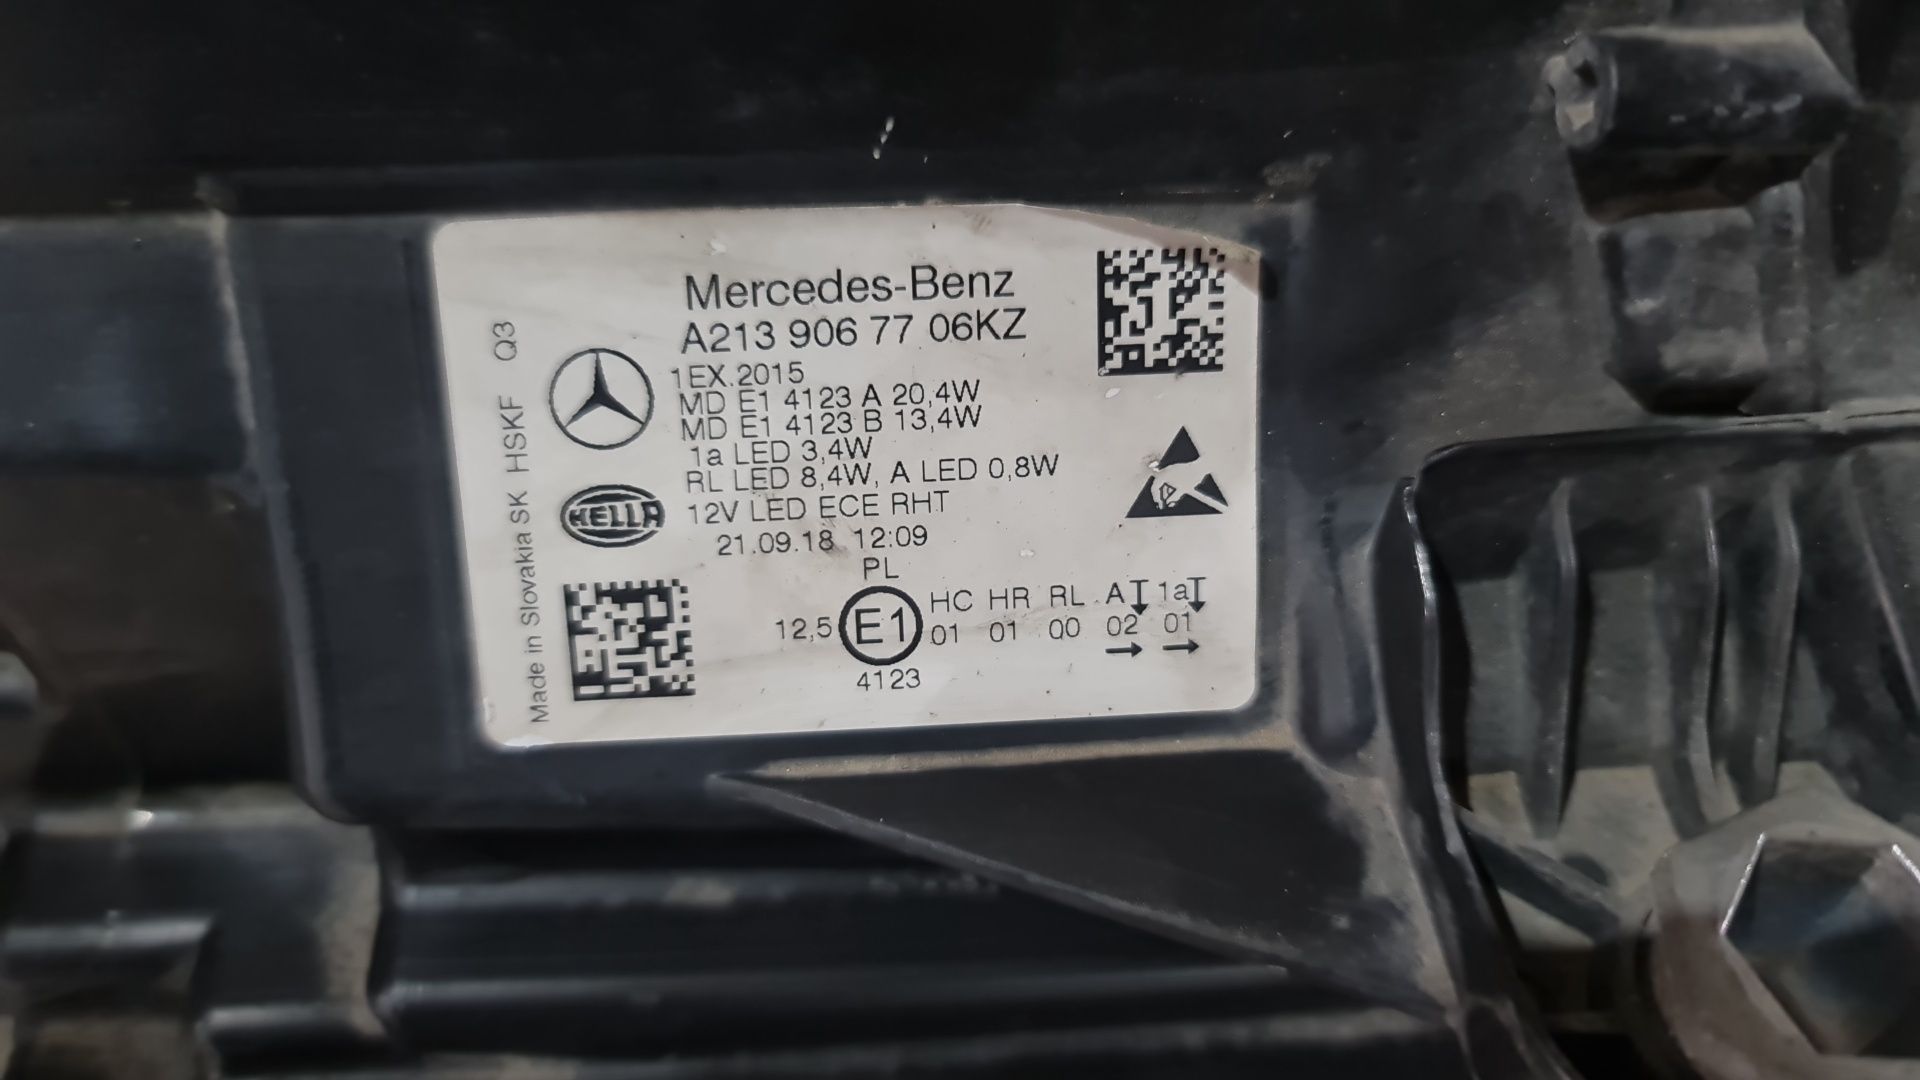 Far stanga Mercedes E Class W213 Led Hight Performance A2139067706